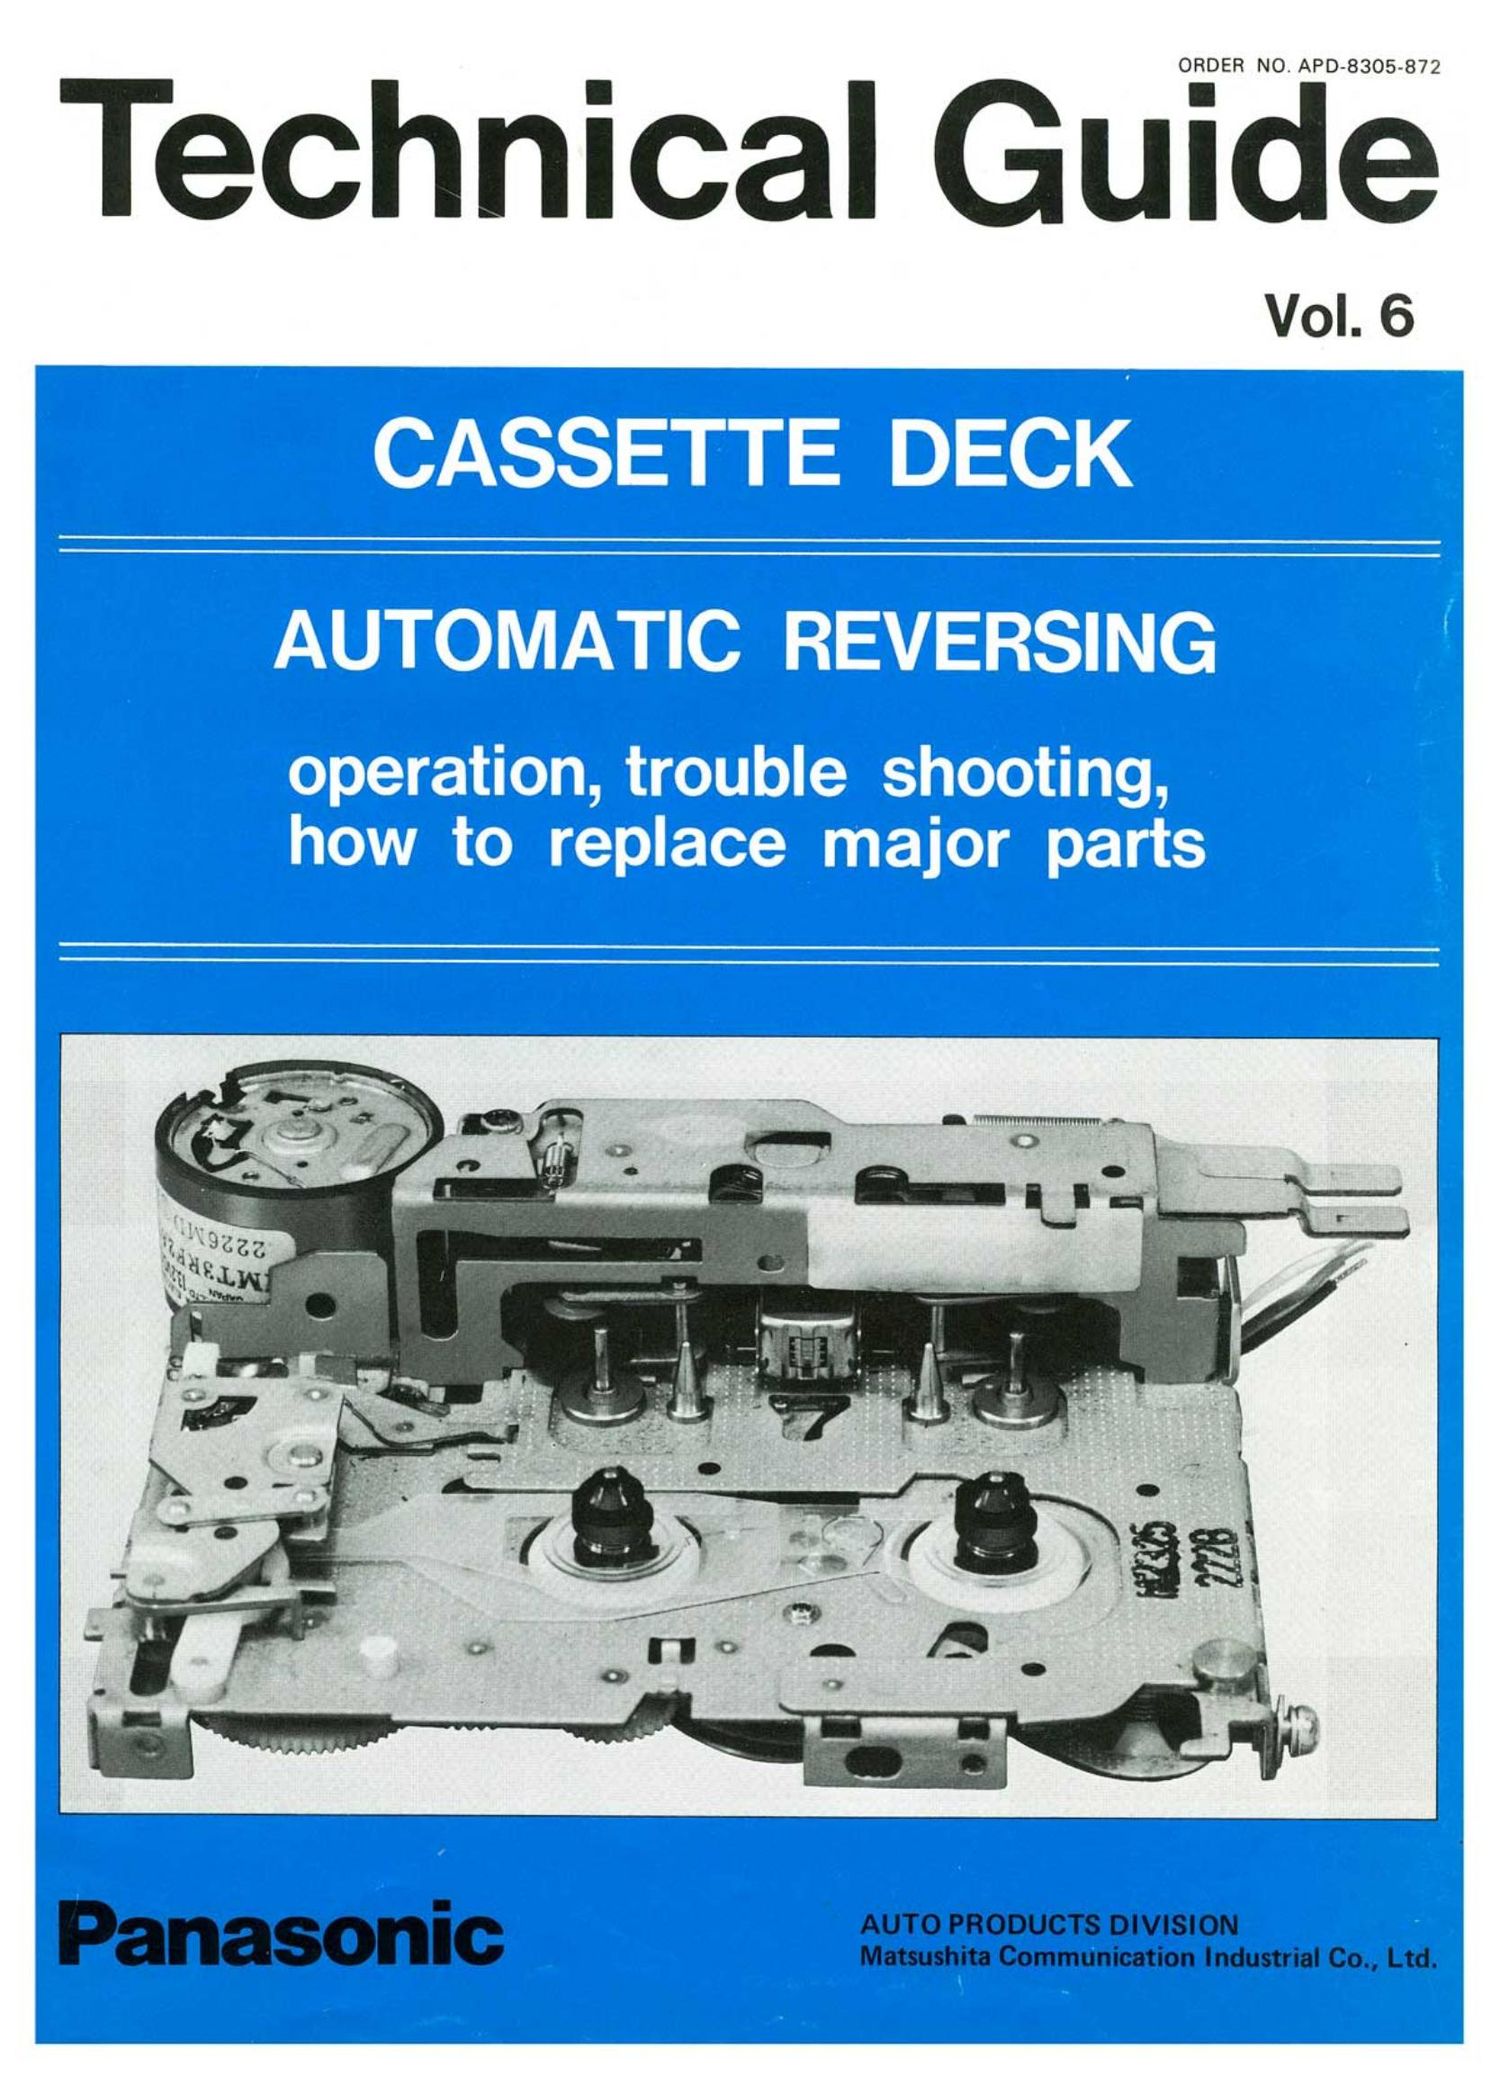 Technics Technical Cassette Deck Guide Vol.6